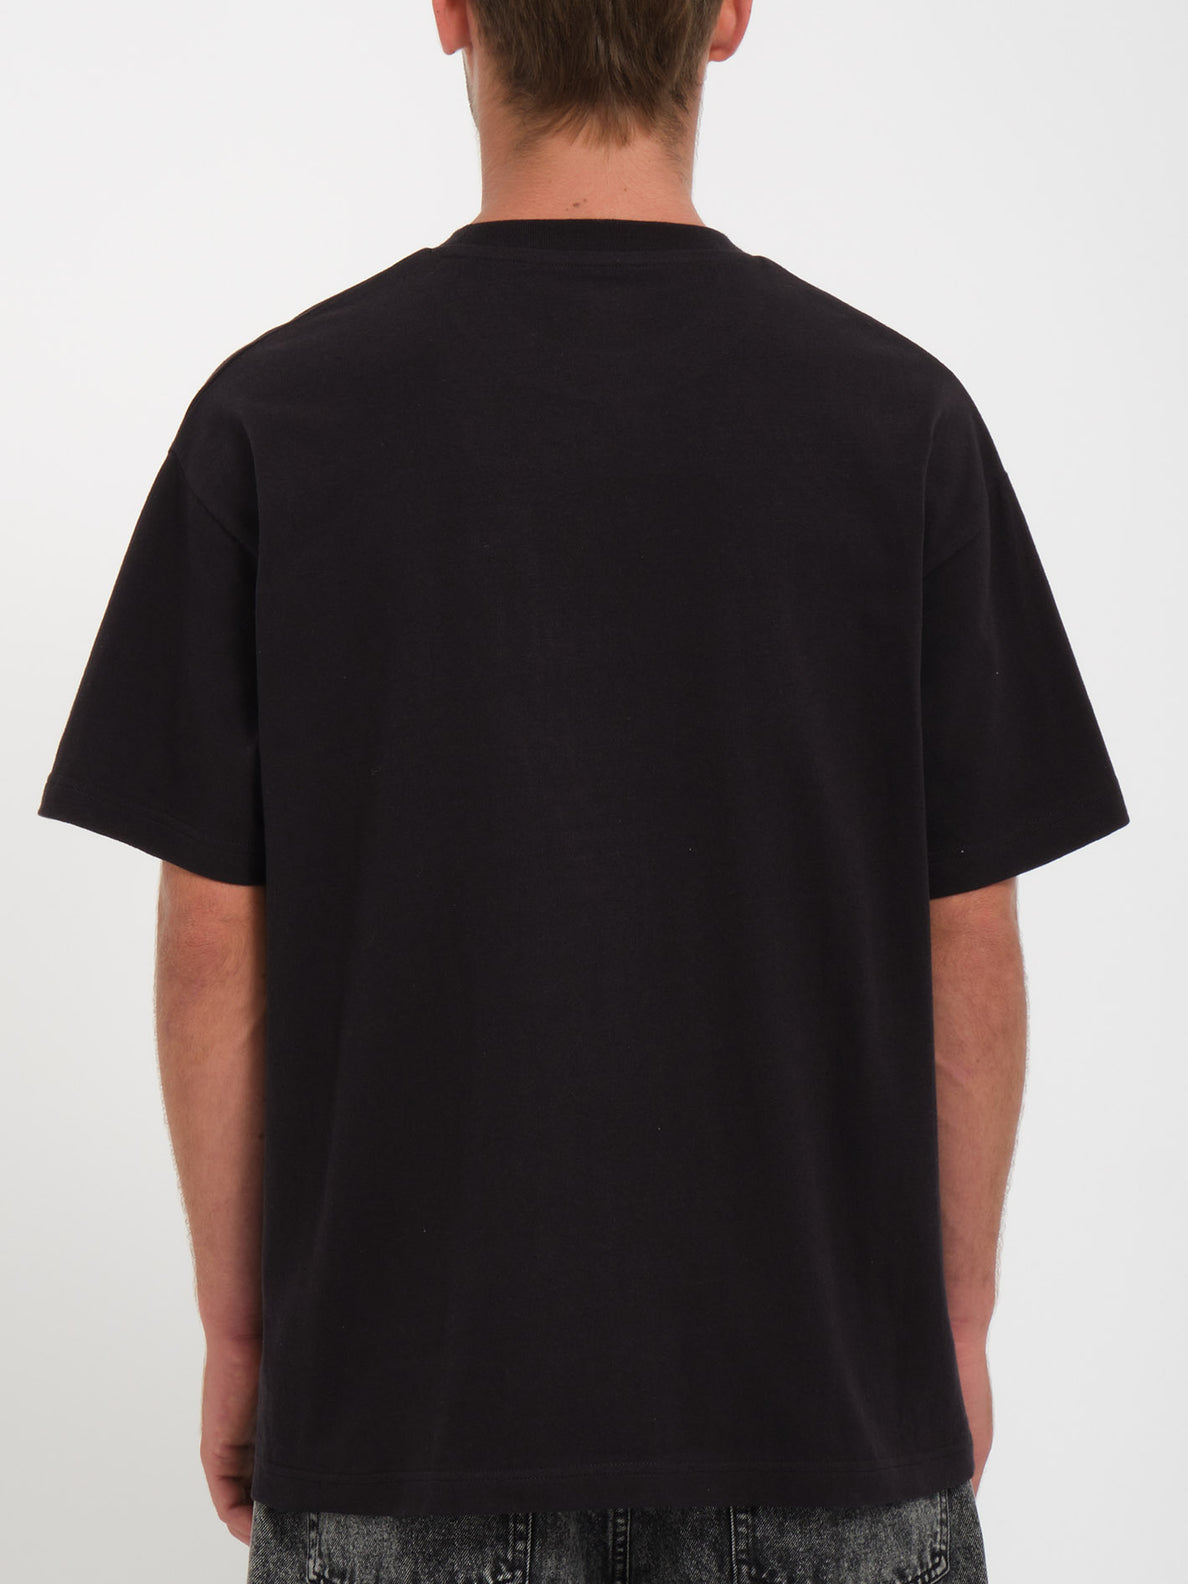 Ripple Stone Loose Short Sleeve Tee Shirt - Black